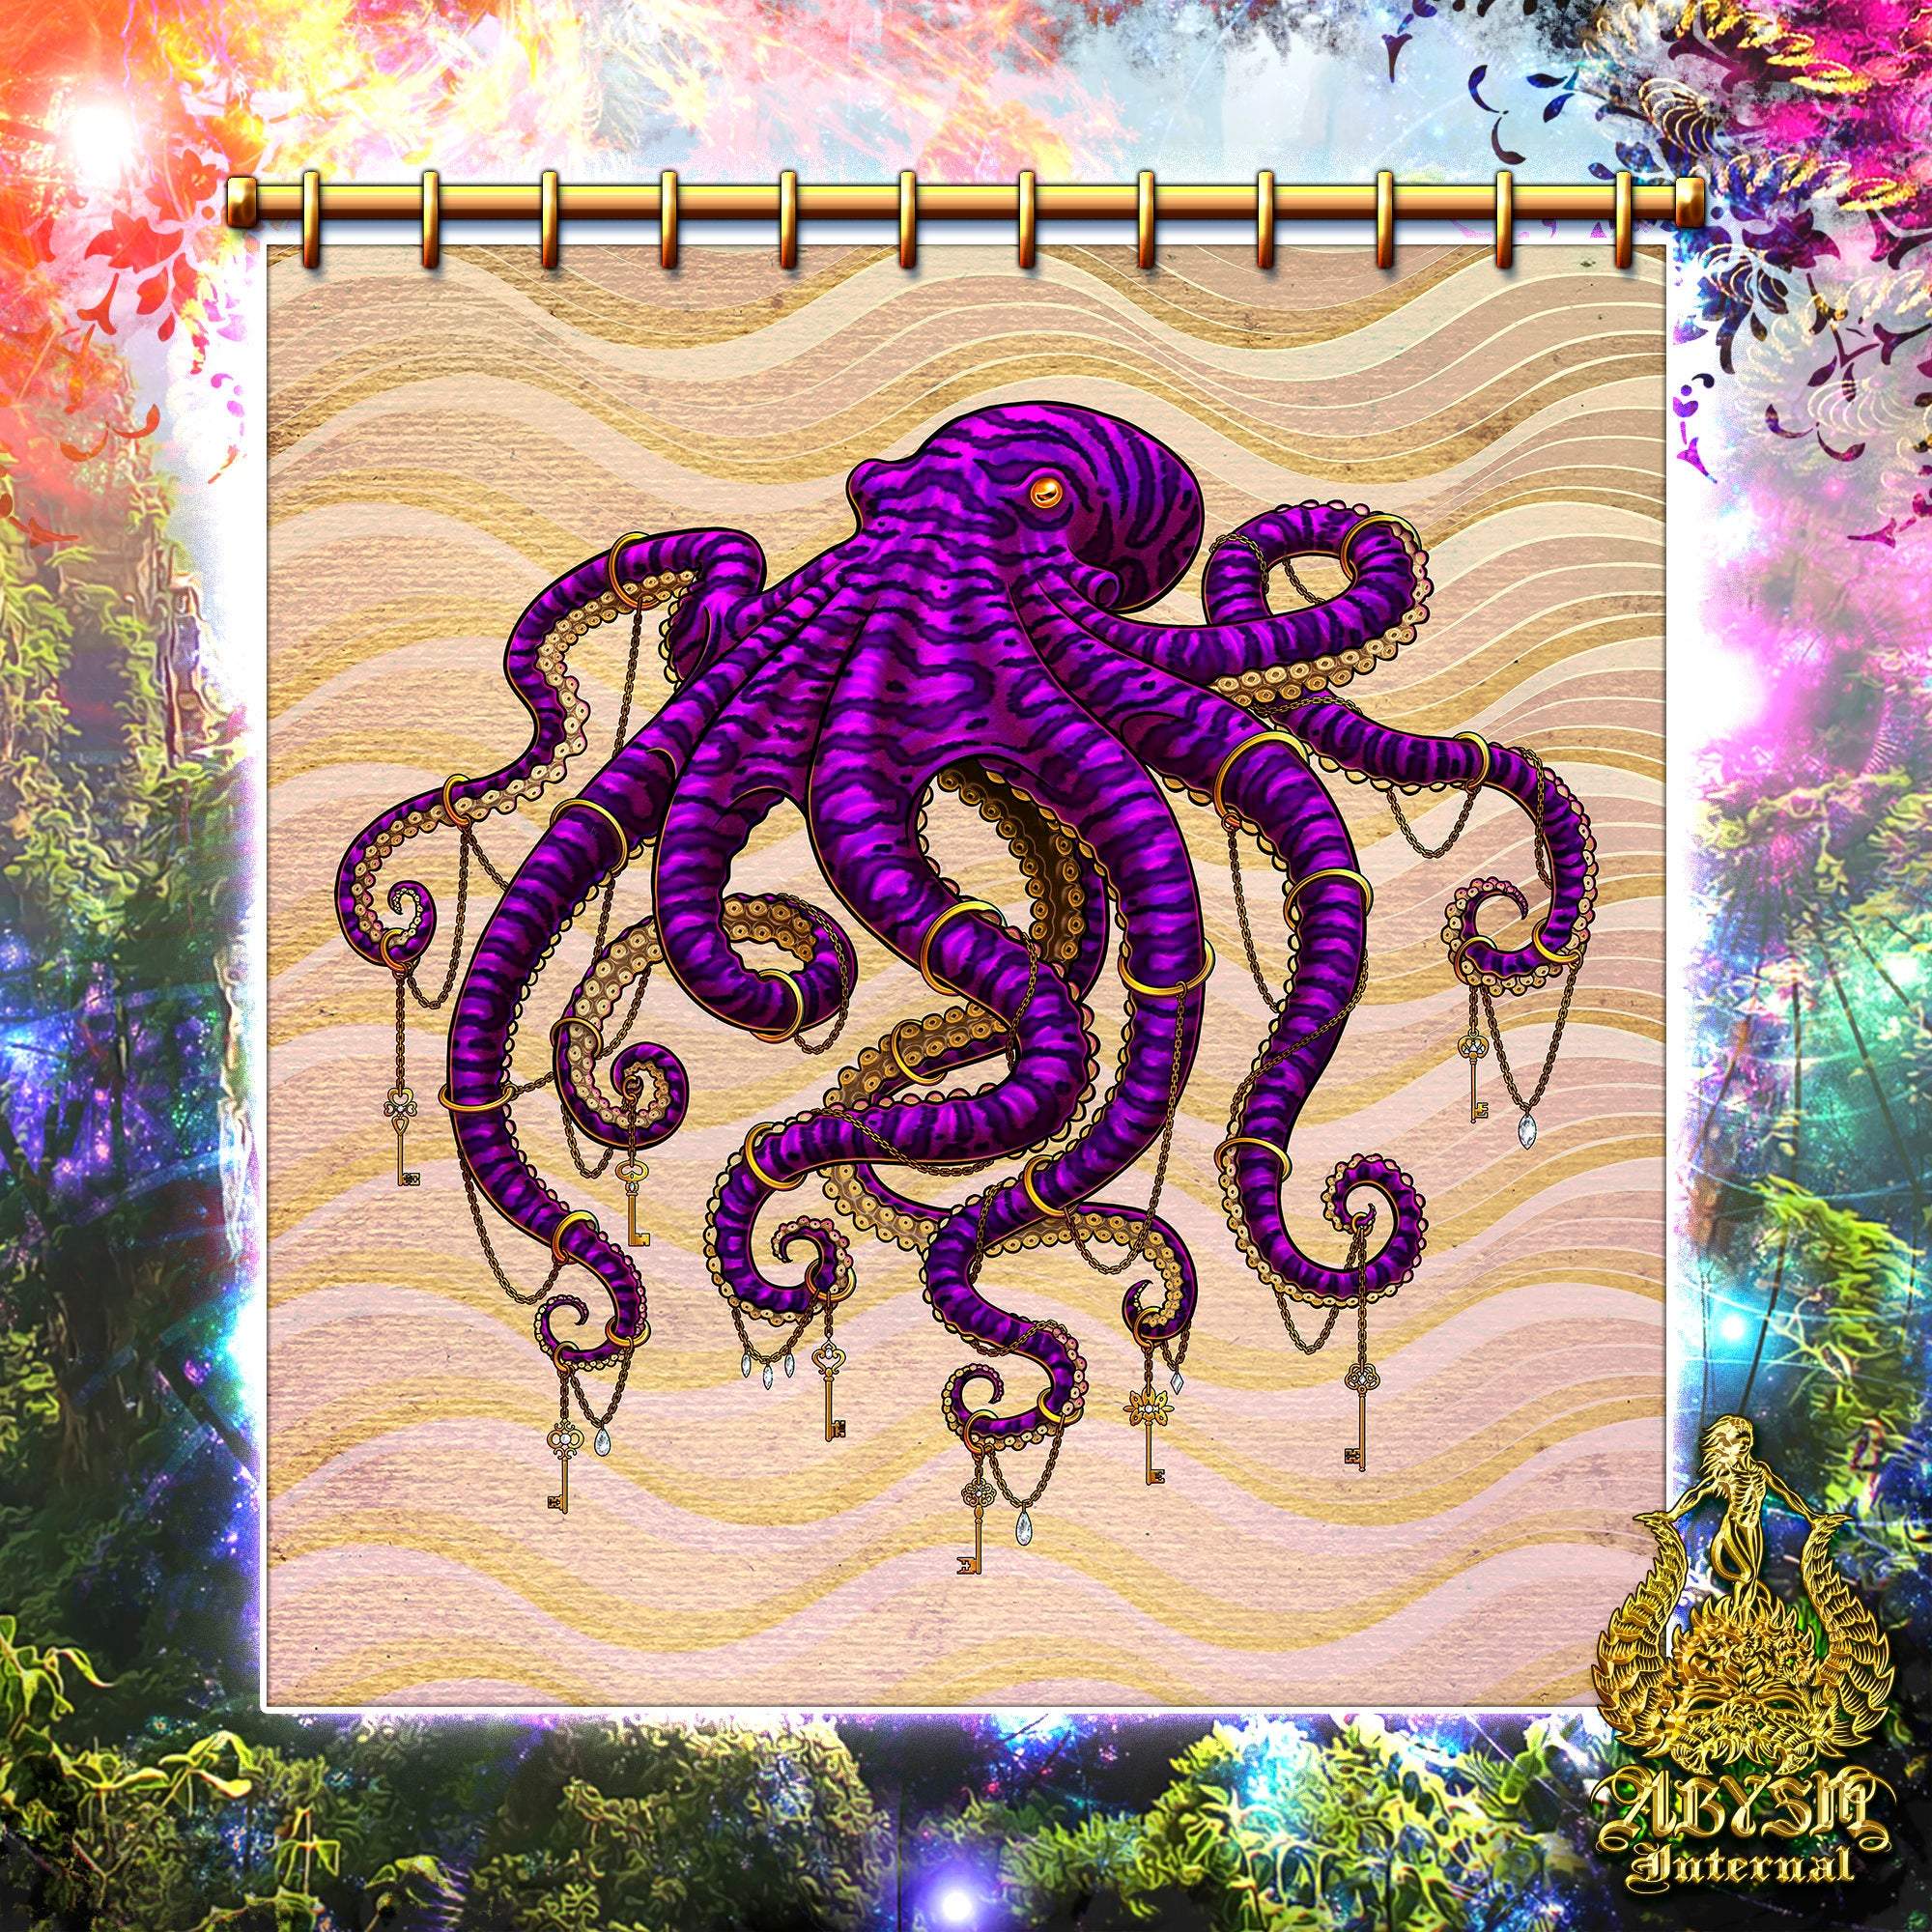 Octopus Shower Curtain, Hippie and Boho Bathroom Decor - Purple & Sand - Abysm Internal